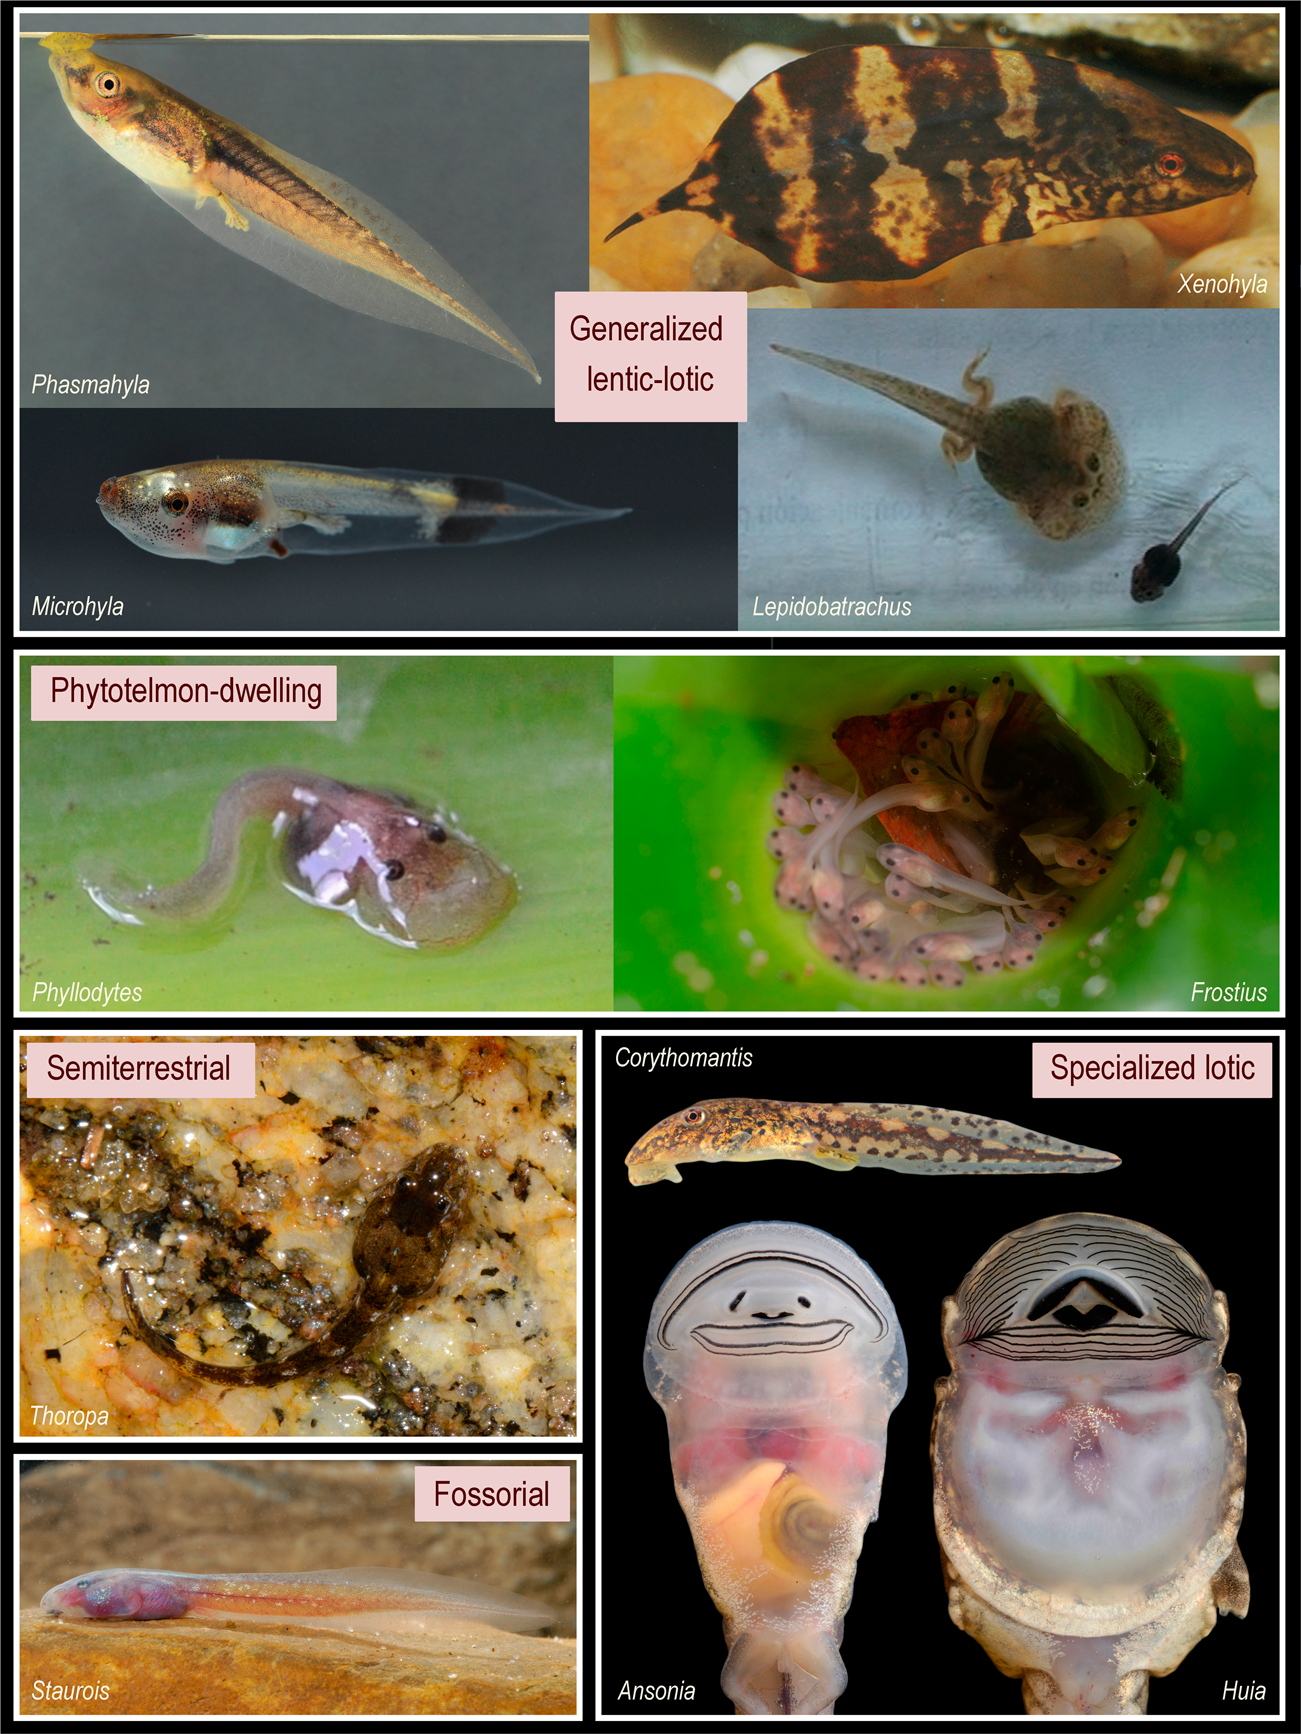 Global shortfalls of knowledge on anuran tadpoles